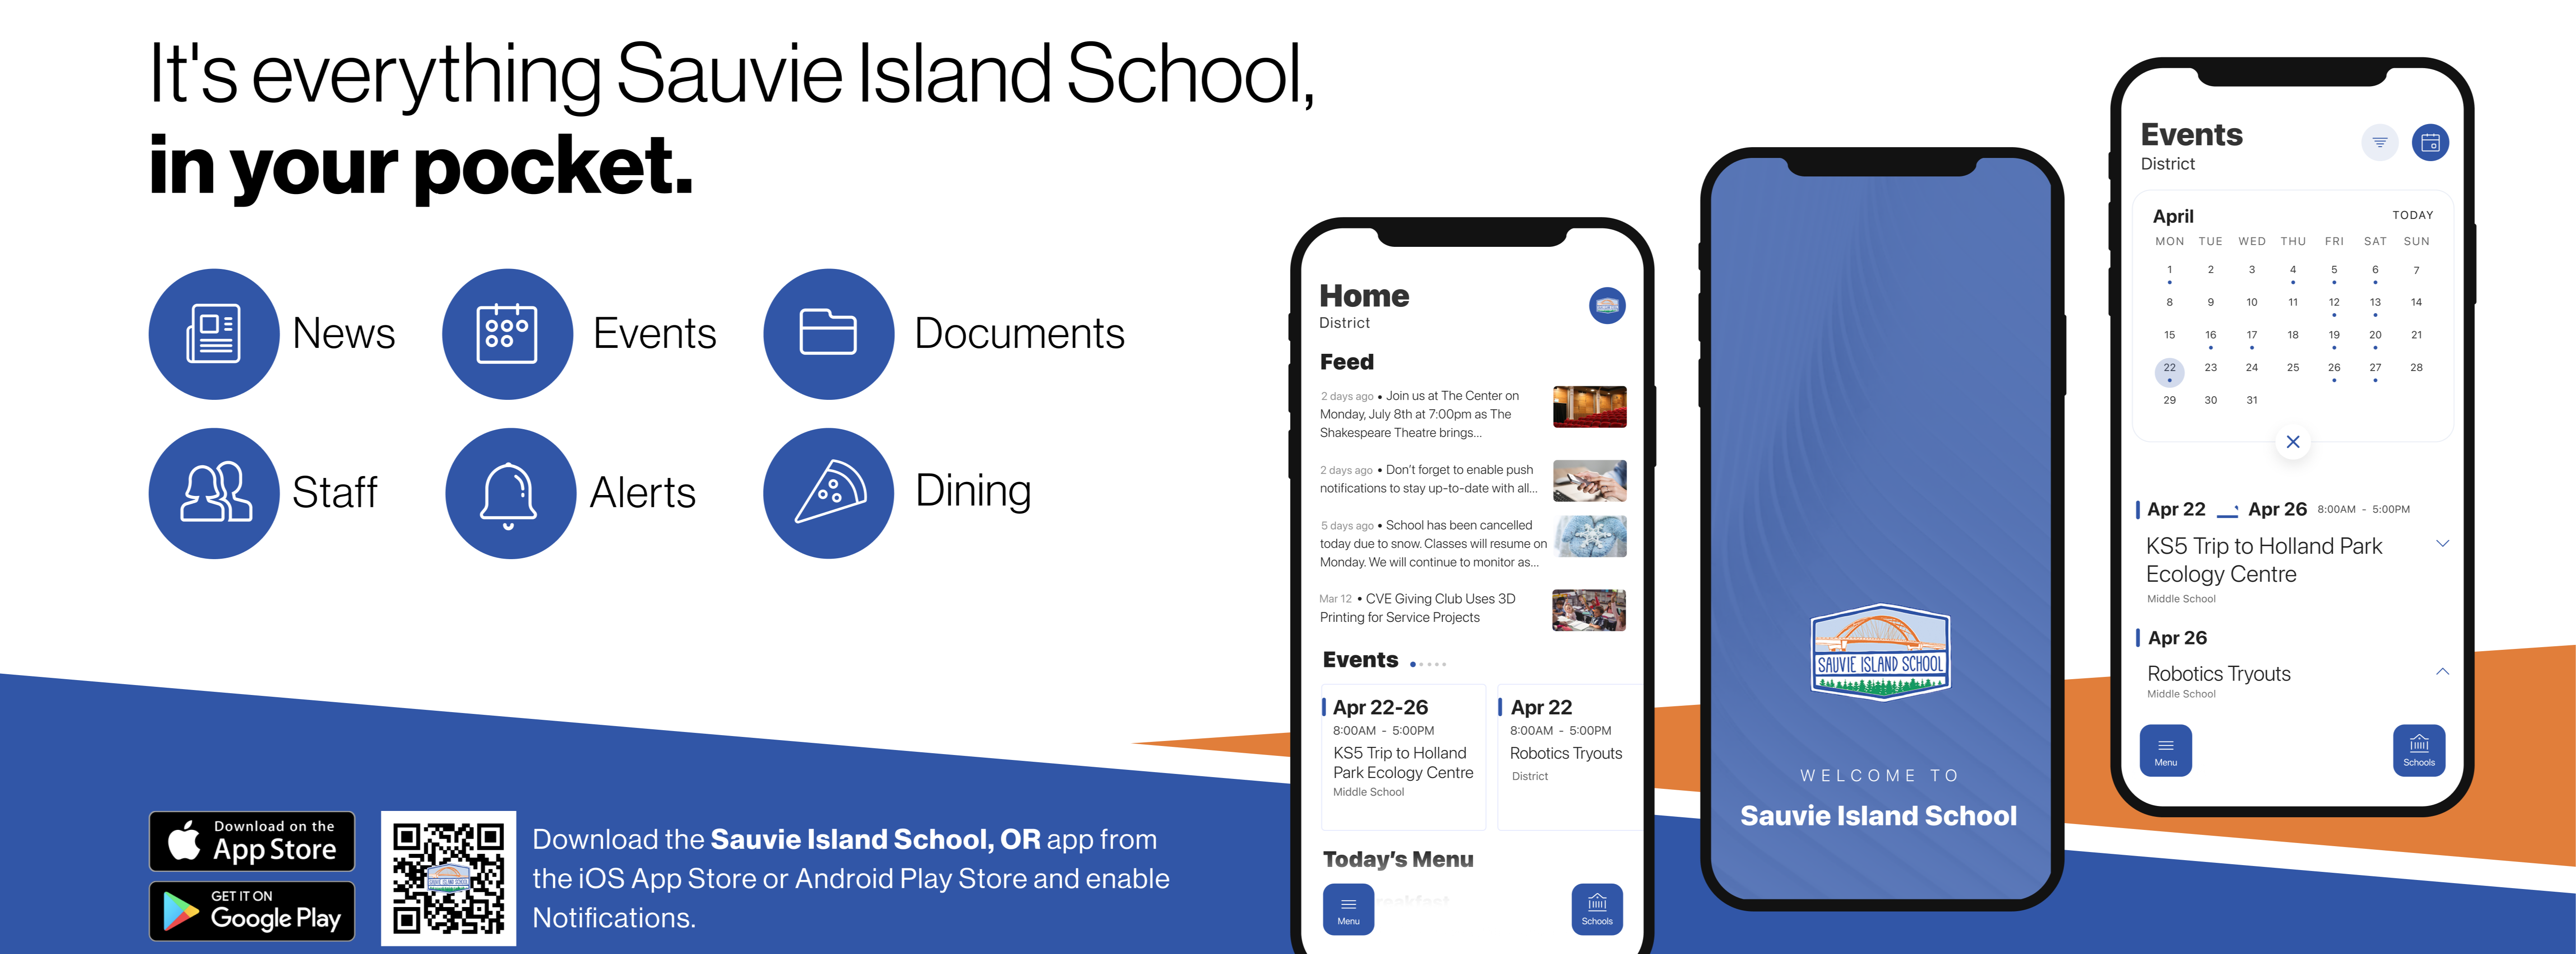 School App flyer. It's everything Sauvie Island School, in your pocket.